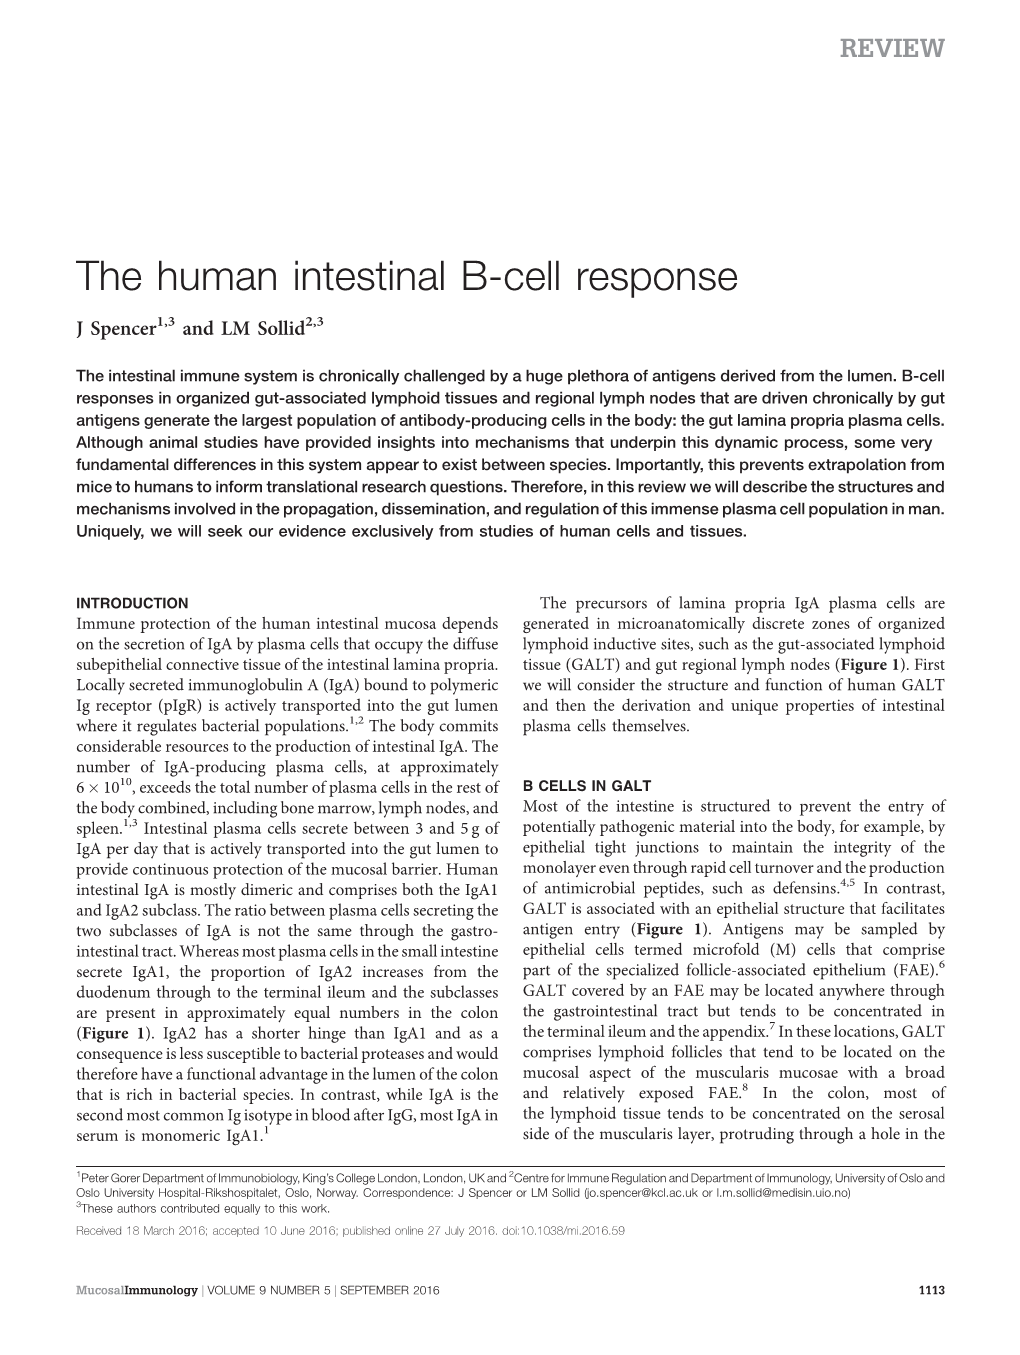 The Human Intestinal B-Cell Response